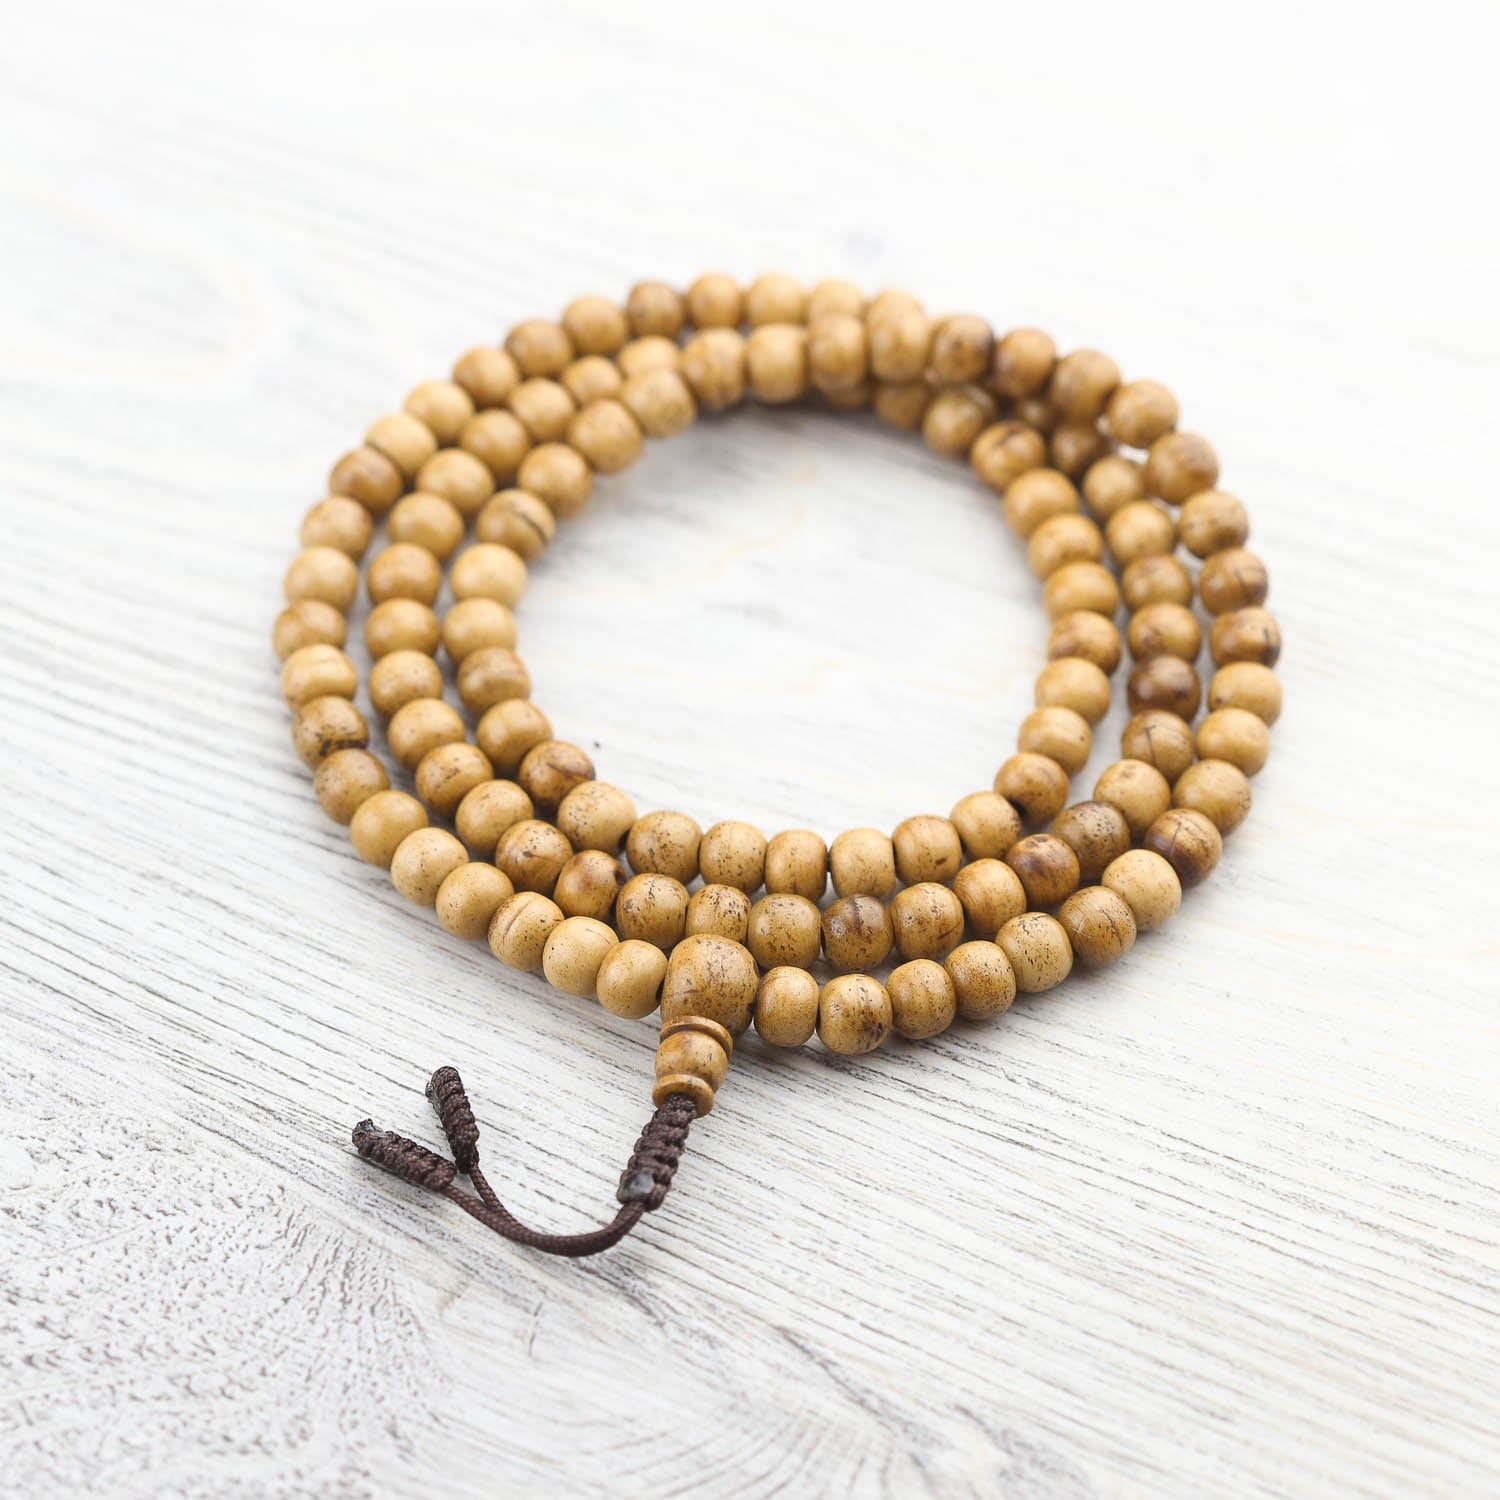 Zen Dear Unisex Natural Colorful Wood Buddhist Prayer Beads Bracelet N